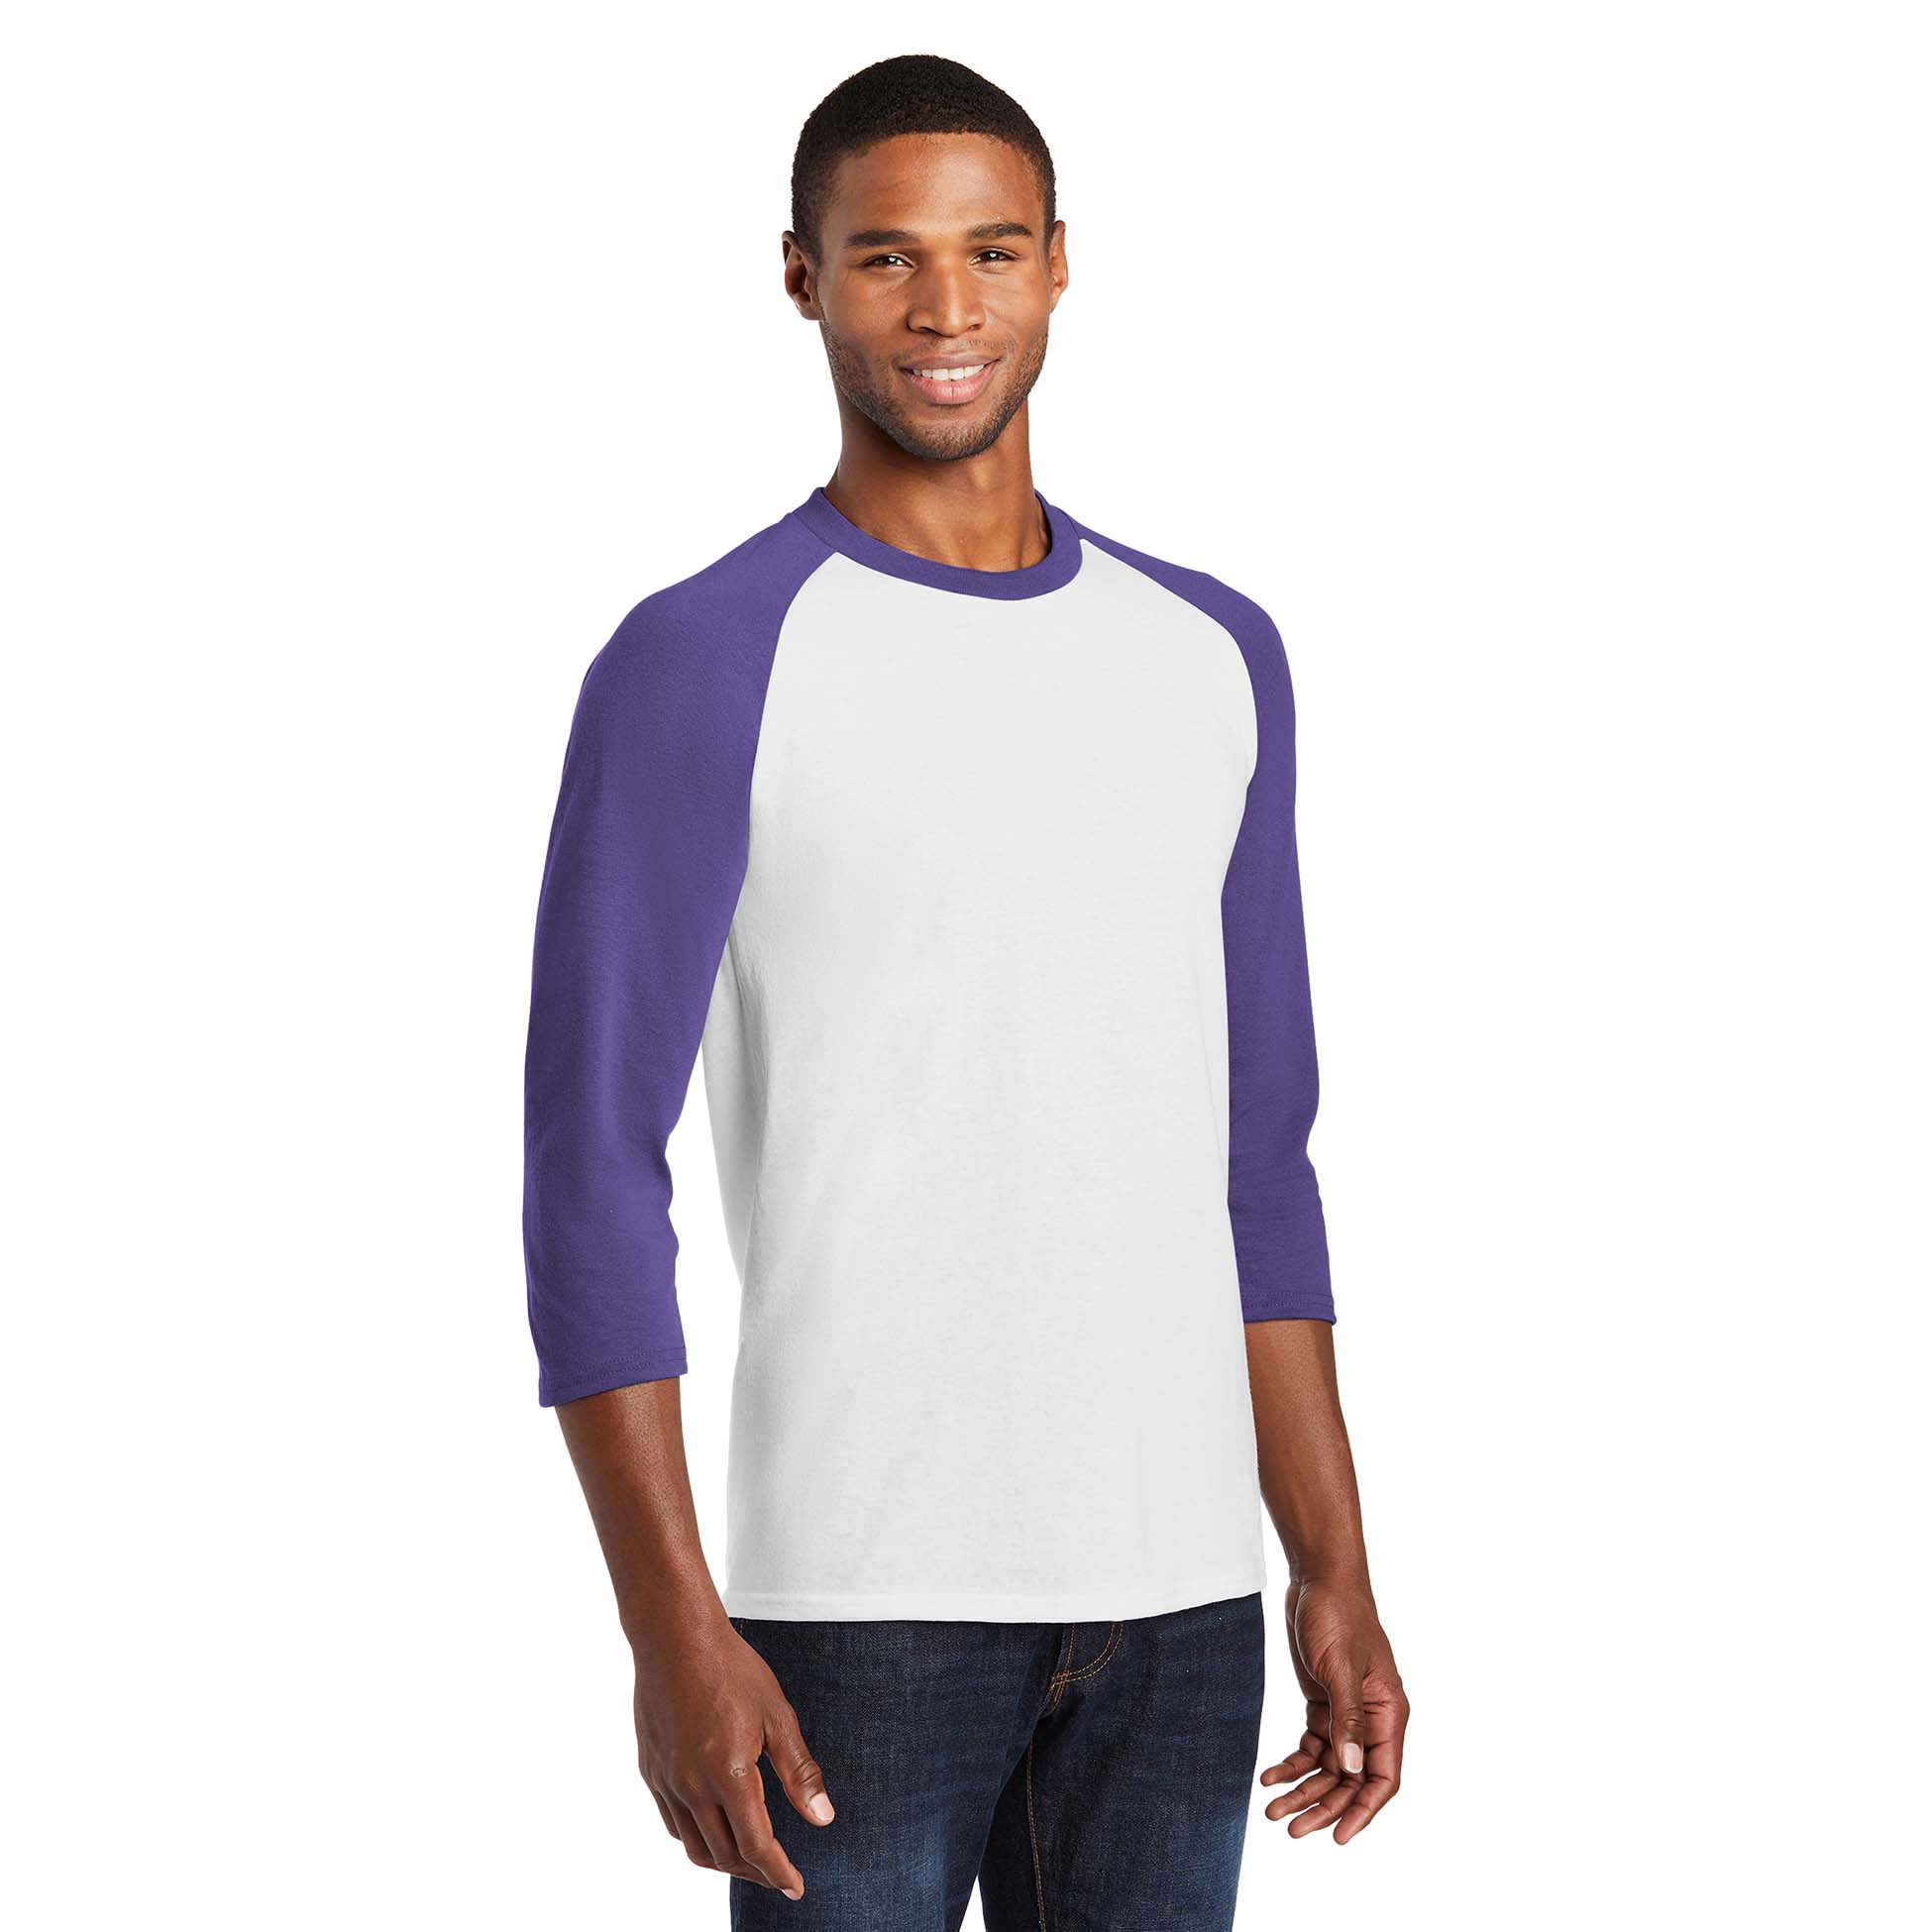 Port & Company PC55RS 3/4-Sleeve Raglan T-Shirt - White/Purple